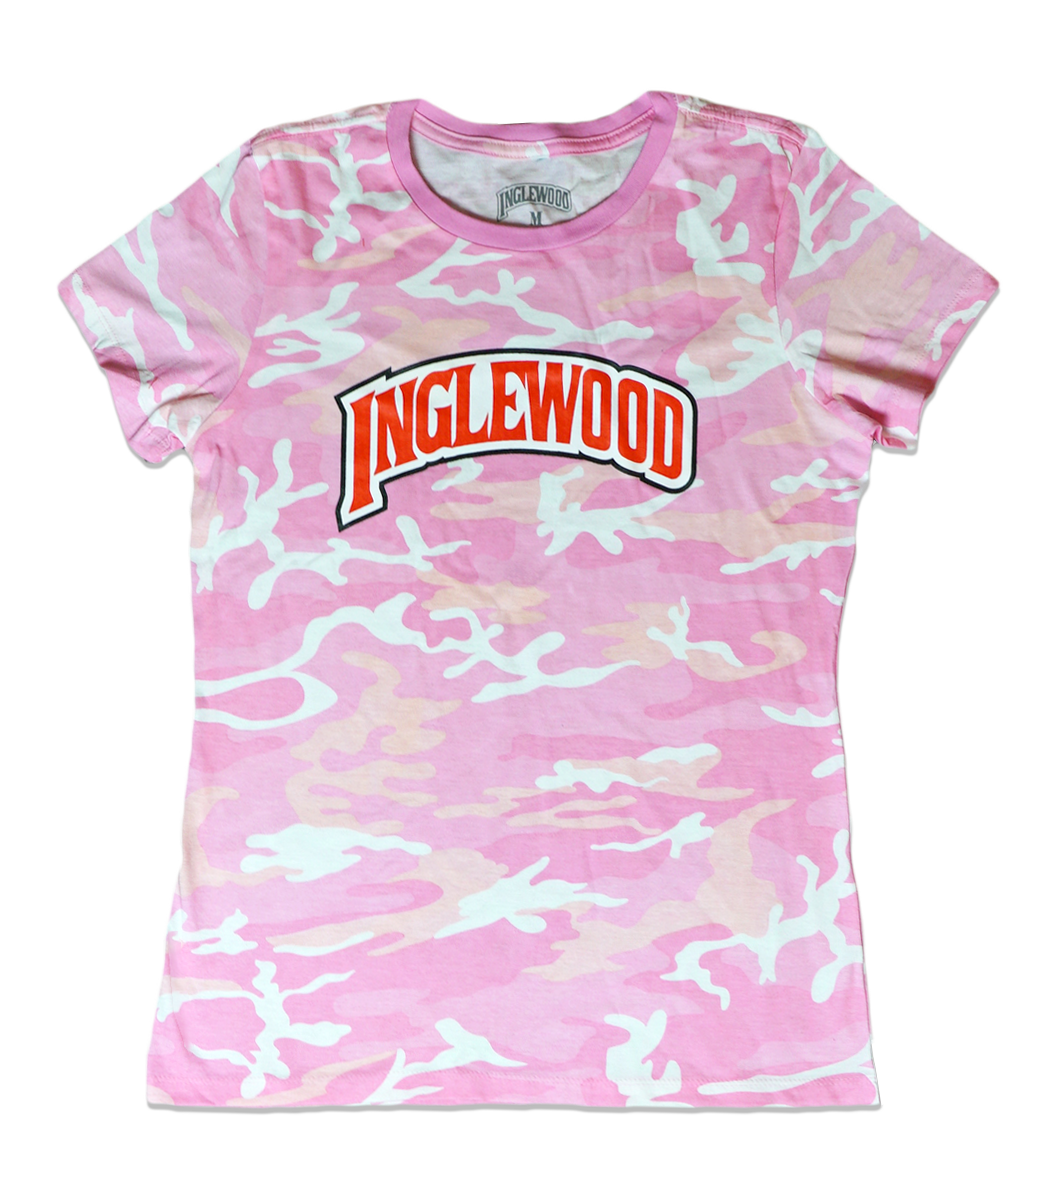 Gucci Women's Shirt - Pink - M